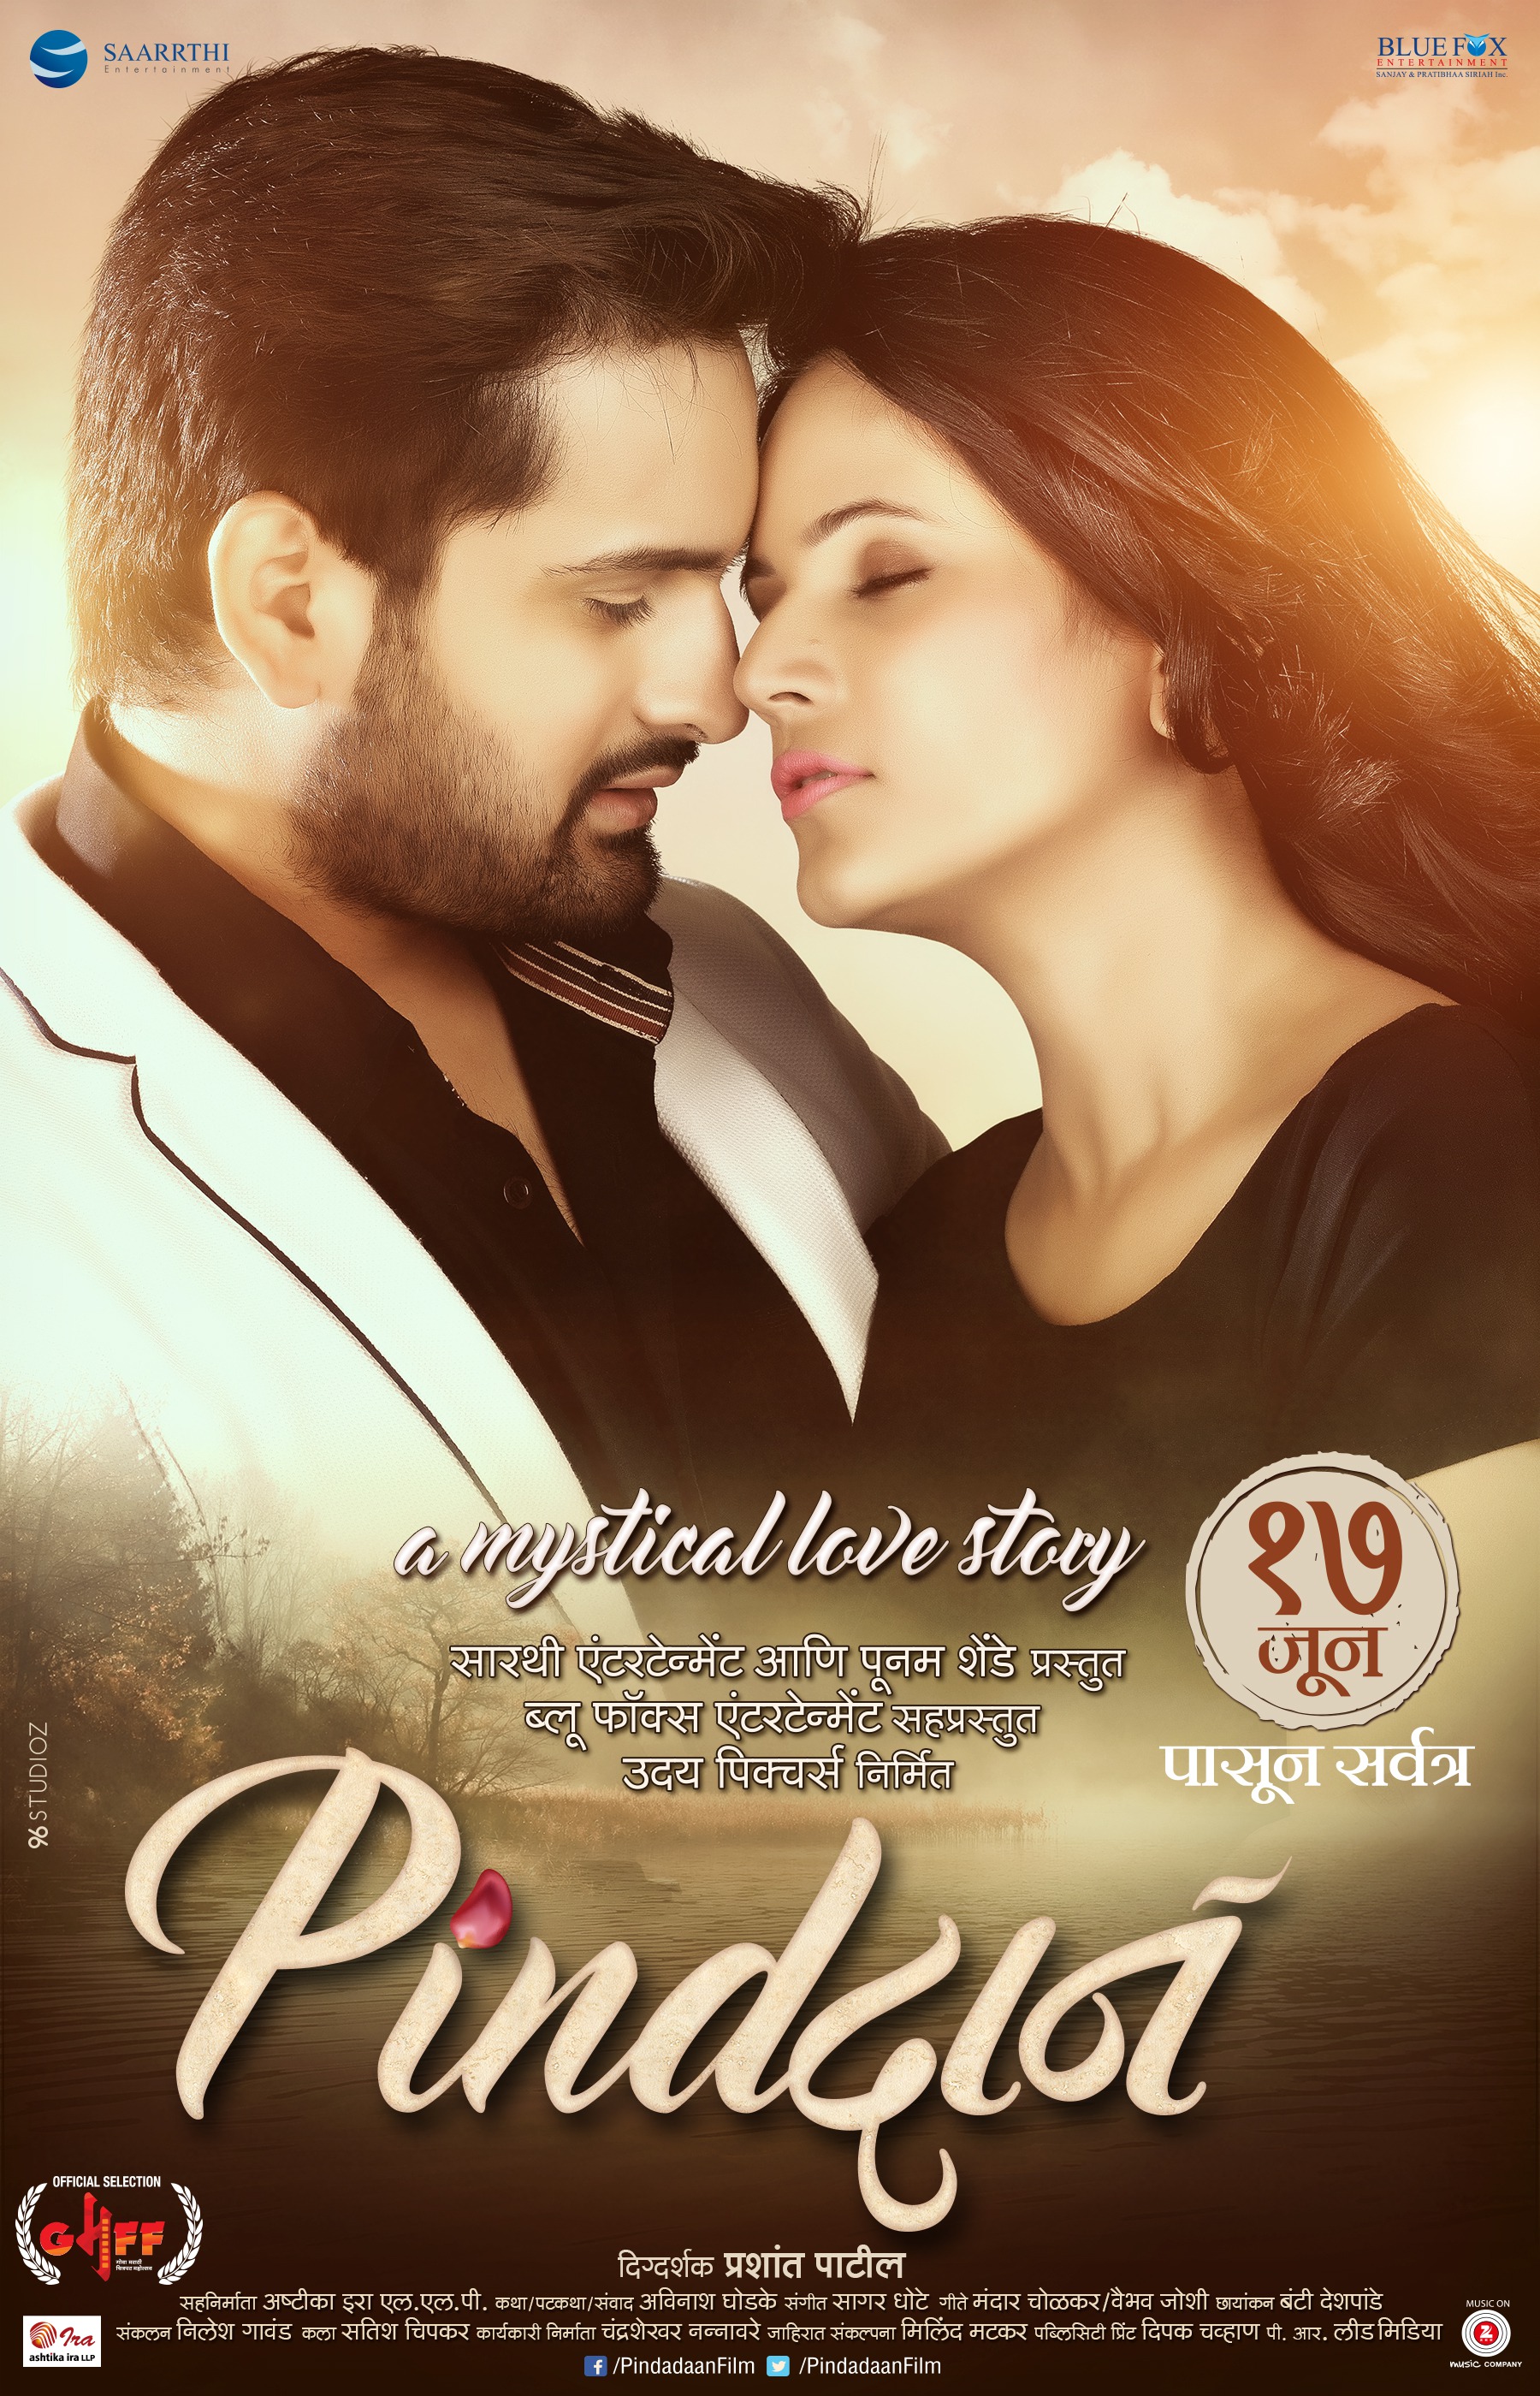 Mega Sized Movie Poster Image for Pindadaan (#2 of 11)